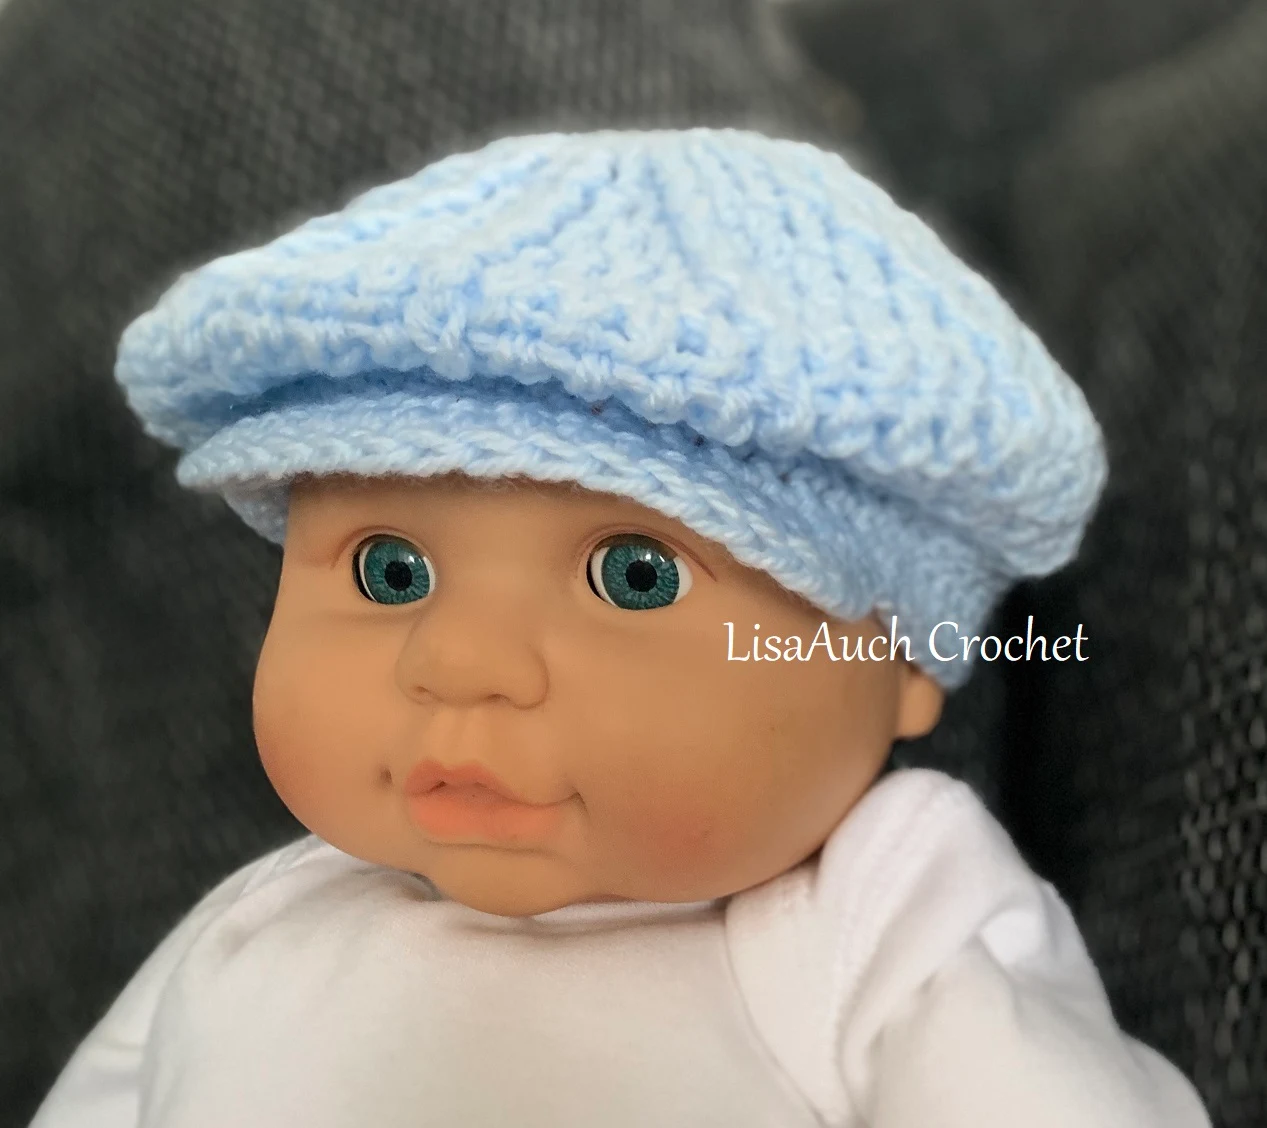 Crochet baby Boy hat patterns free